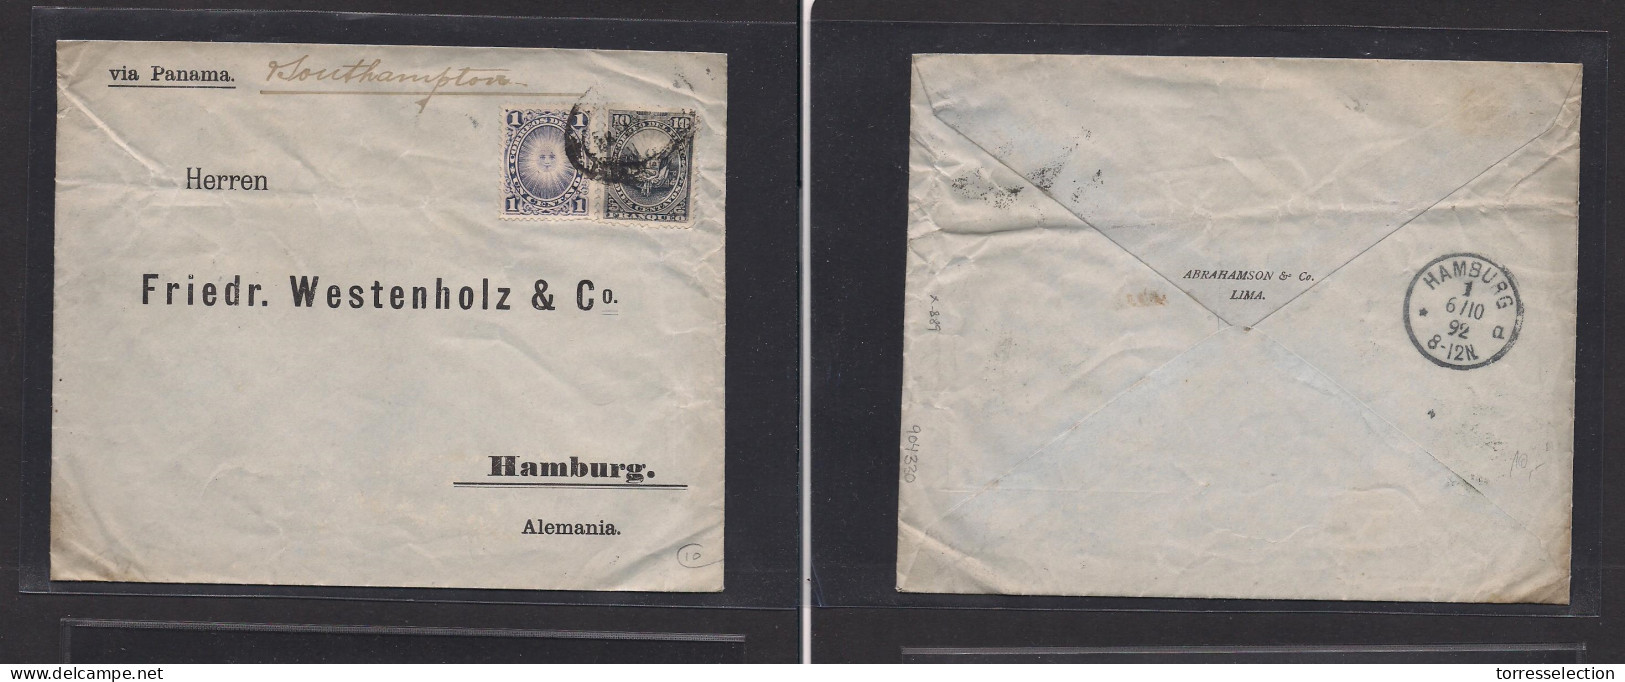 PERU. Peru - Cover - 1892 Lima To Hamburg Germany Fkd Env 11c Rate Via Panama Southampton. Easy Deal. XSALE. - Peru